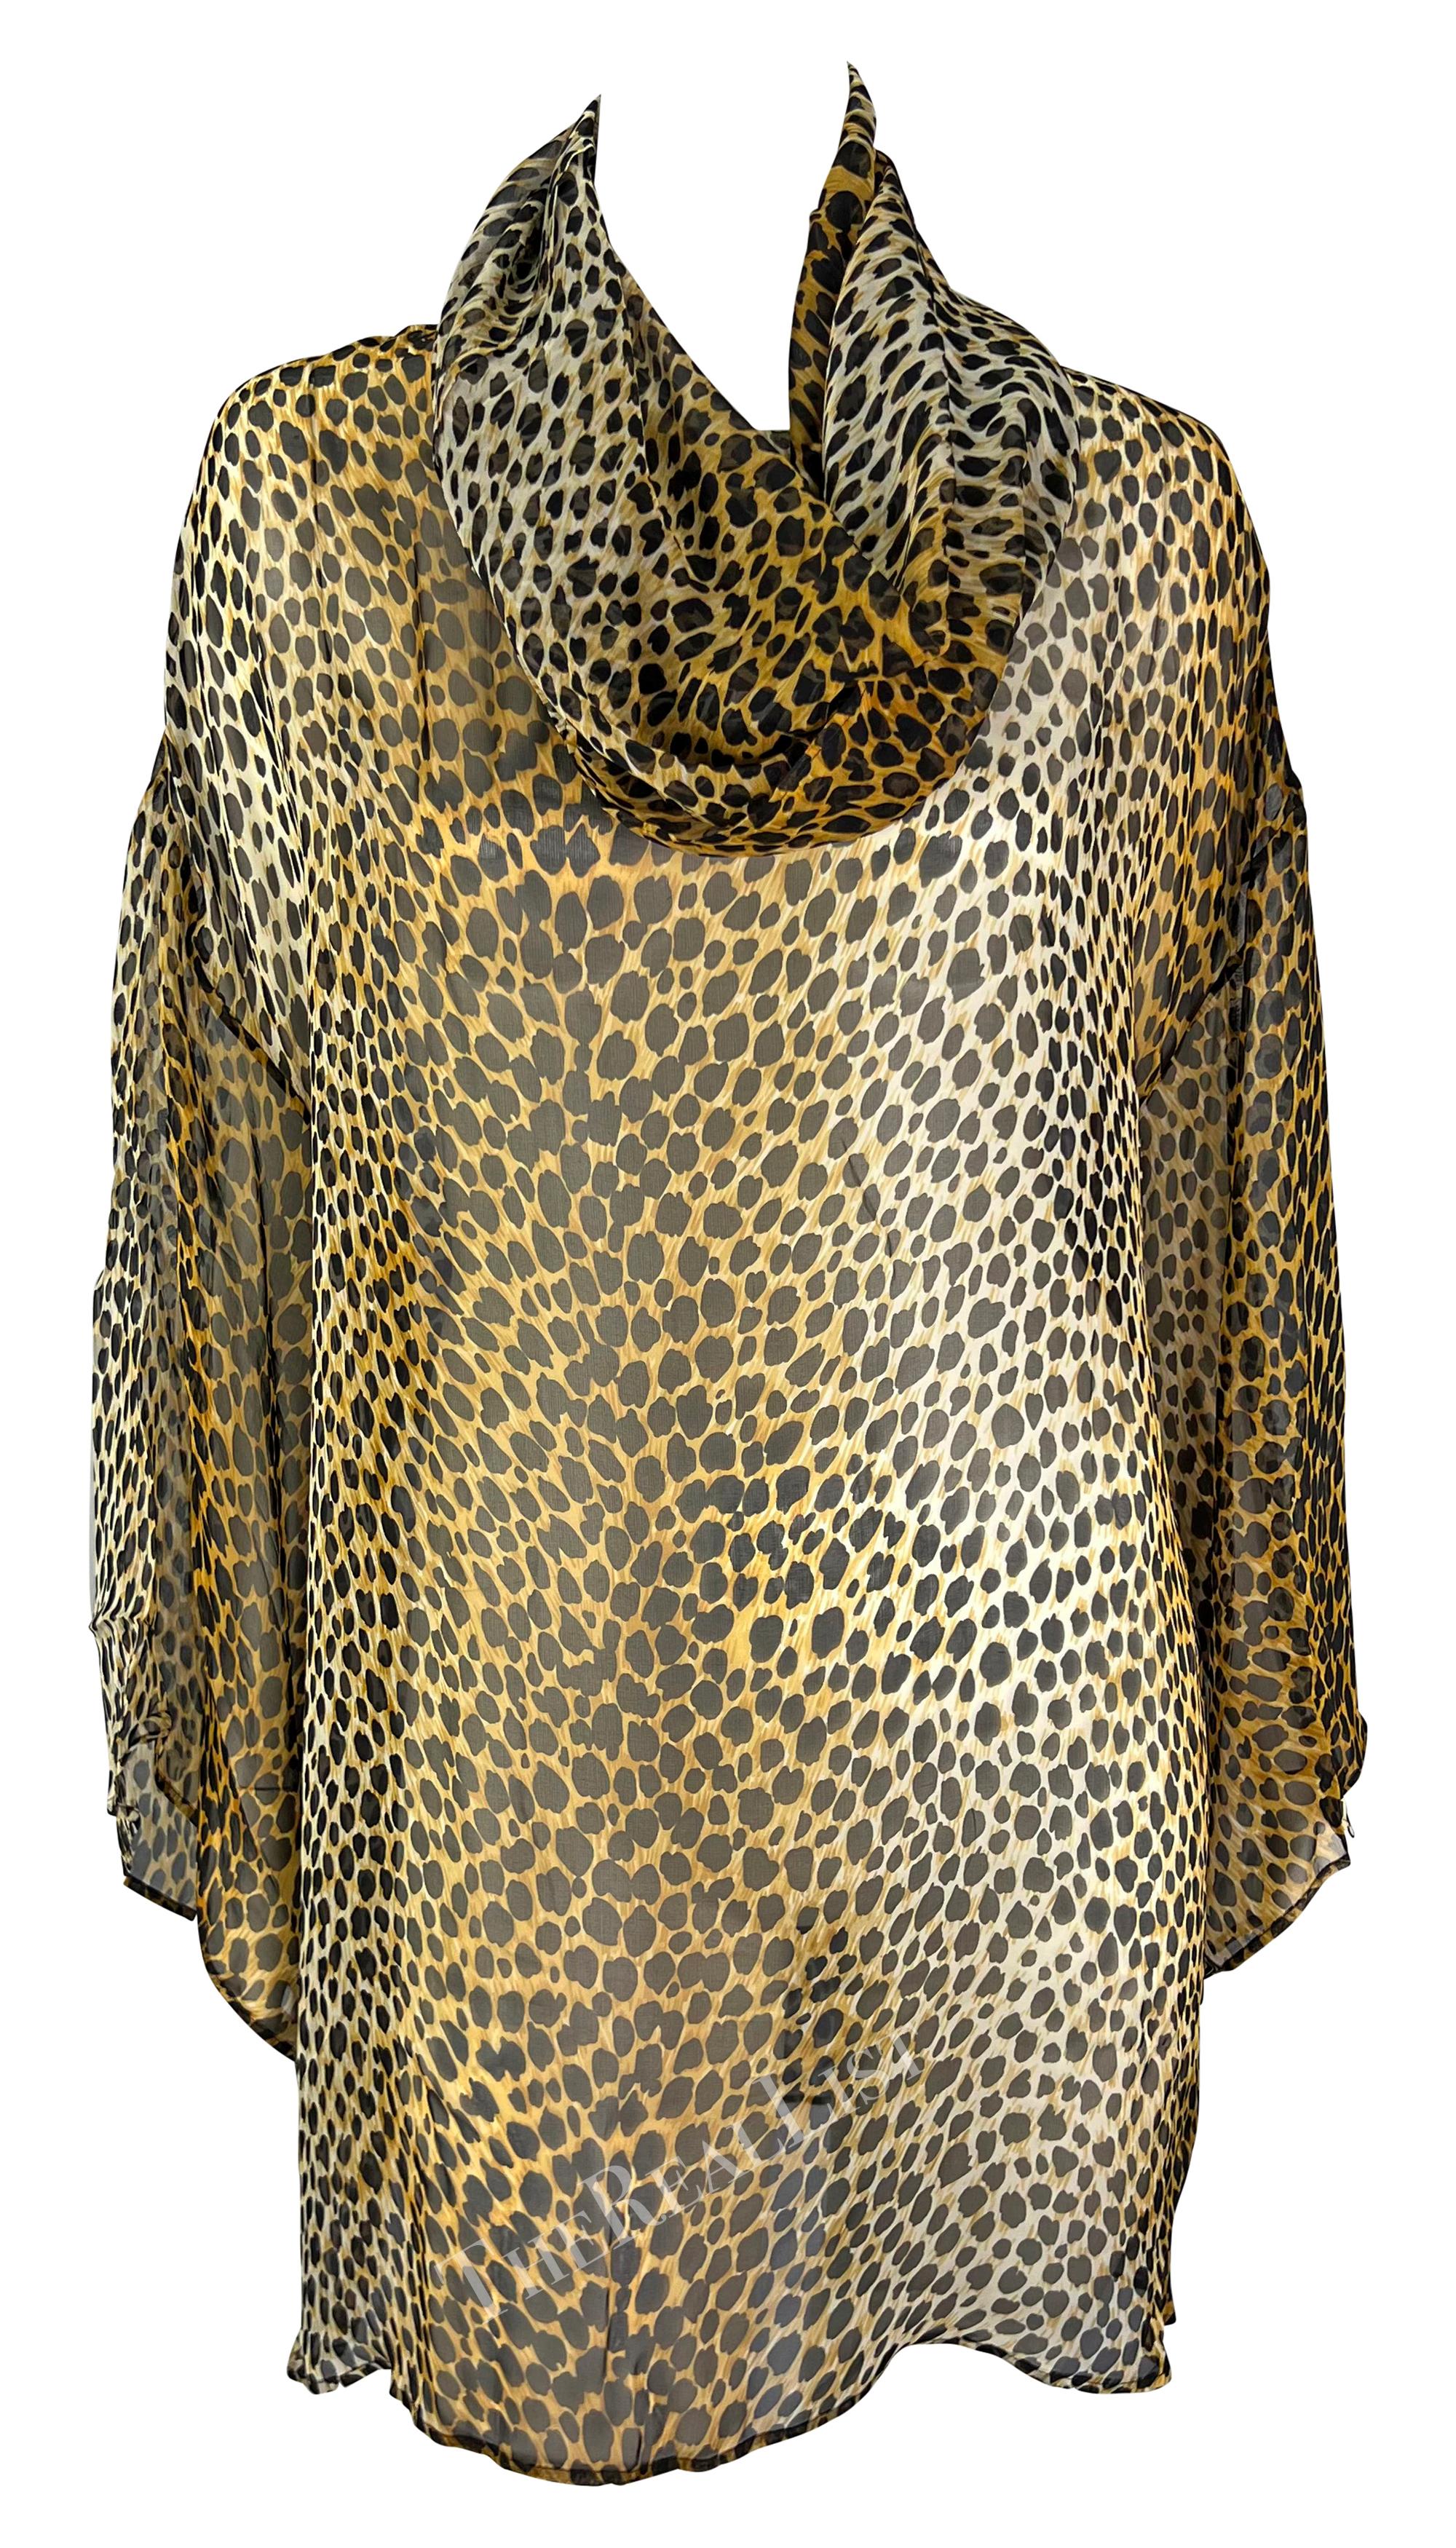 S/S 1996 Dolce & Gabbana Runway Cheetah Print Sheer Silk Hooded Poncho Tunic 7